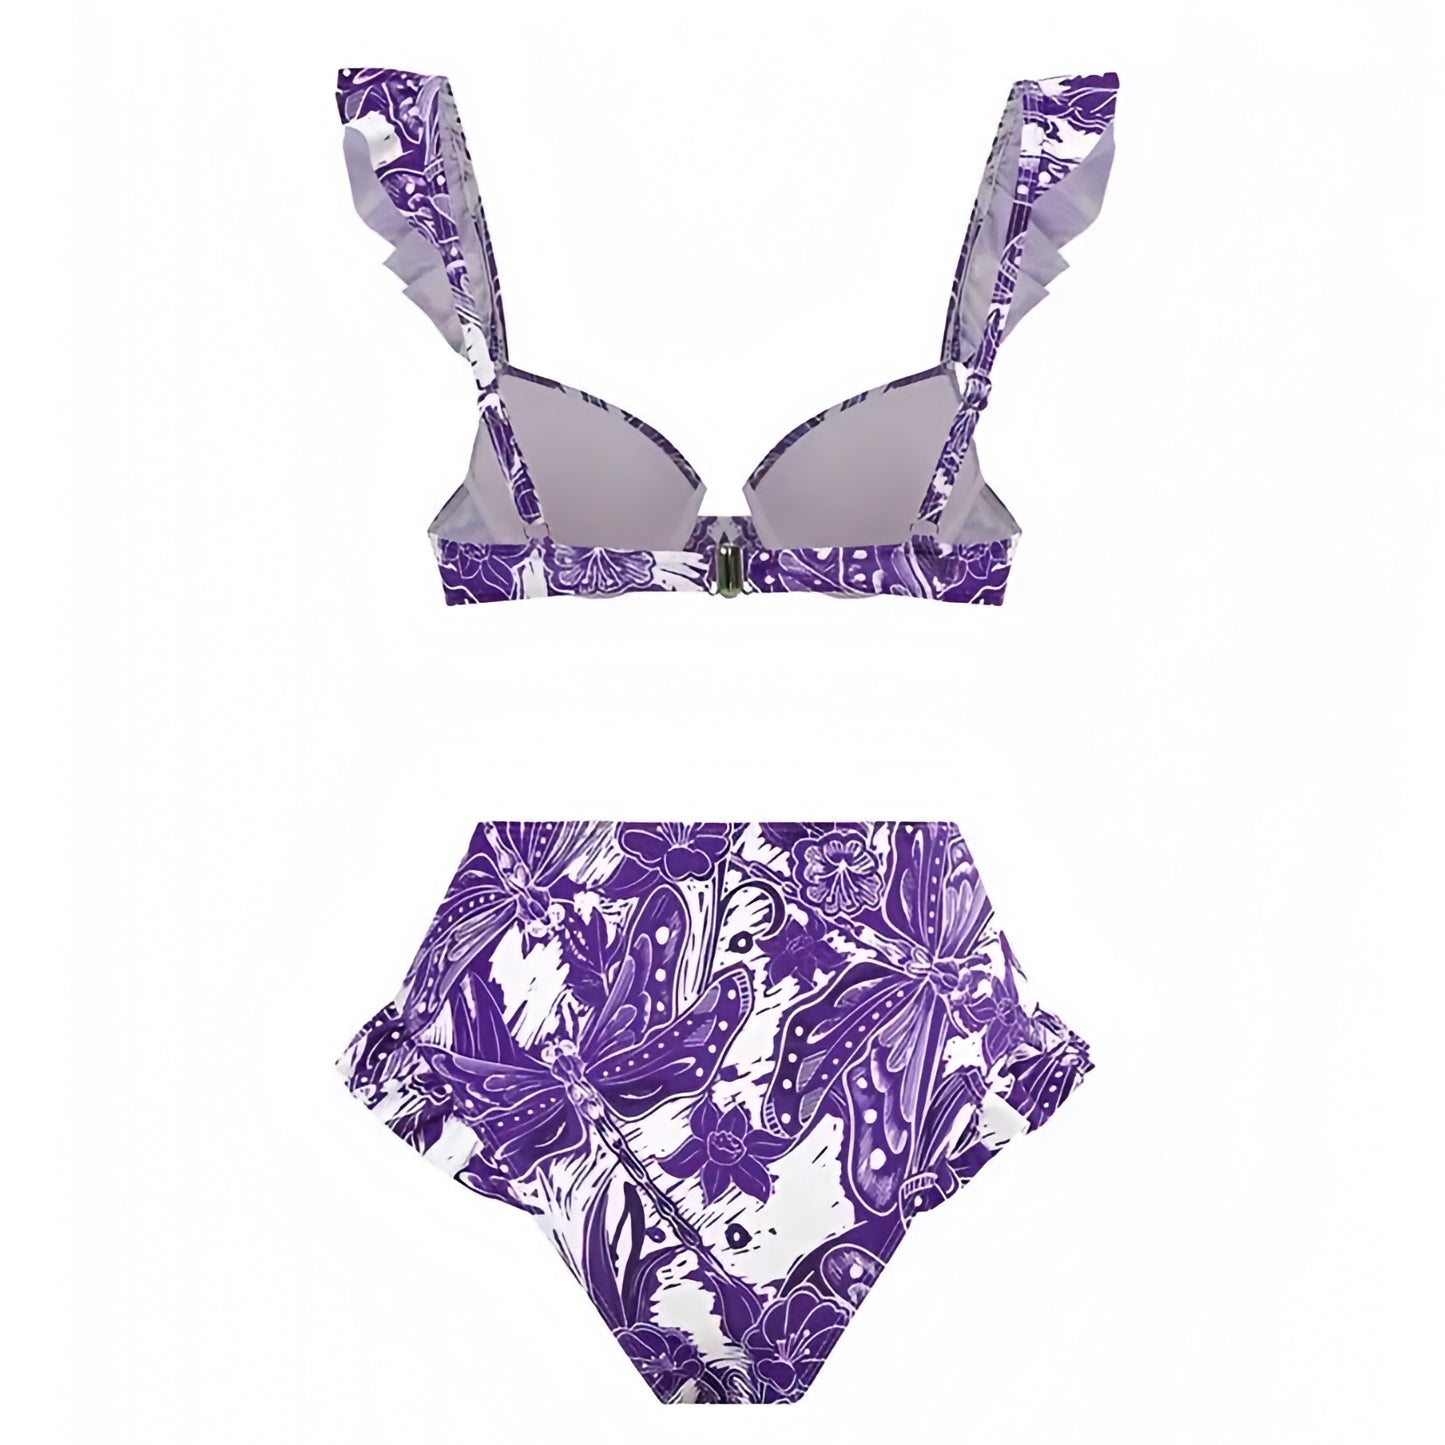 floral-print-purple-white-flower-patterned-ruffle-trim-sweetheart-neckline-spaghetti-strap-sleeveless-backless-open-back-underwire-push-up-cheeky-thong-boho-bohemian-2-piece-bikini-set-top-bottoms-swimsuit-swimwear-bathing-suit-women-ladies-teens-tweens-chic-trendy-spring-2024-summer-elegant-feminine-preppy-style-tropical-hawaiian-vacation-beach-wear-revolve-altard-state-loveshackfancy-frankies-bikinis-blackbough-kulakinis-fillyboo-dupe